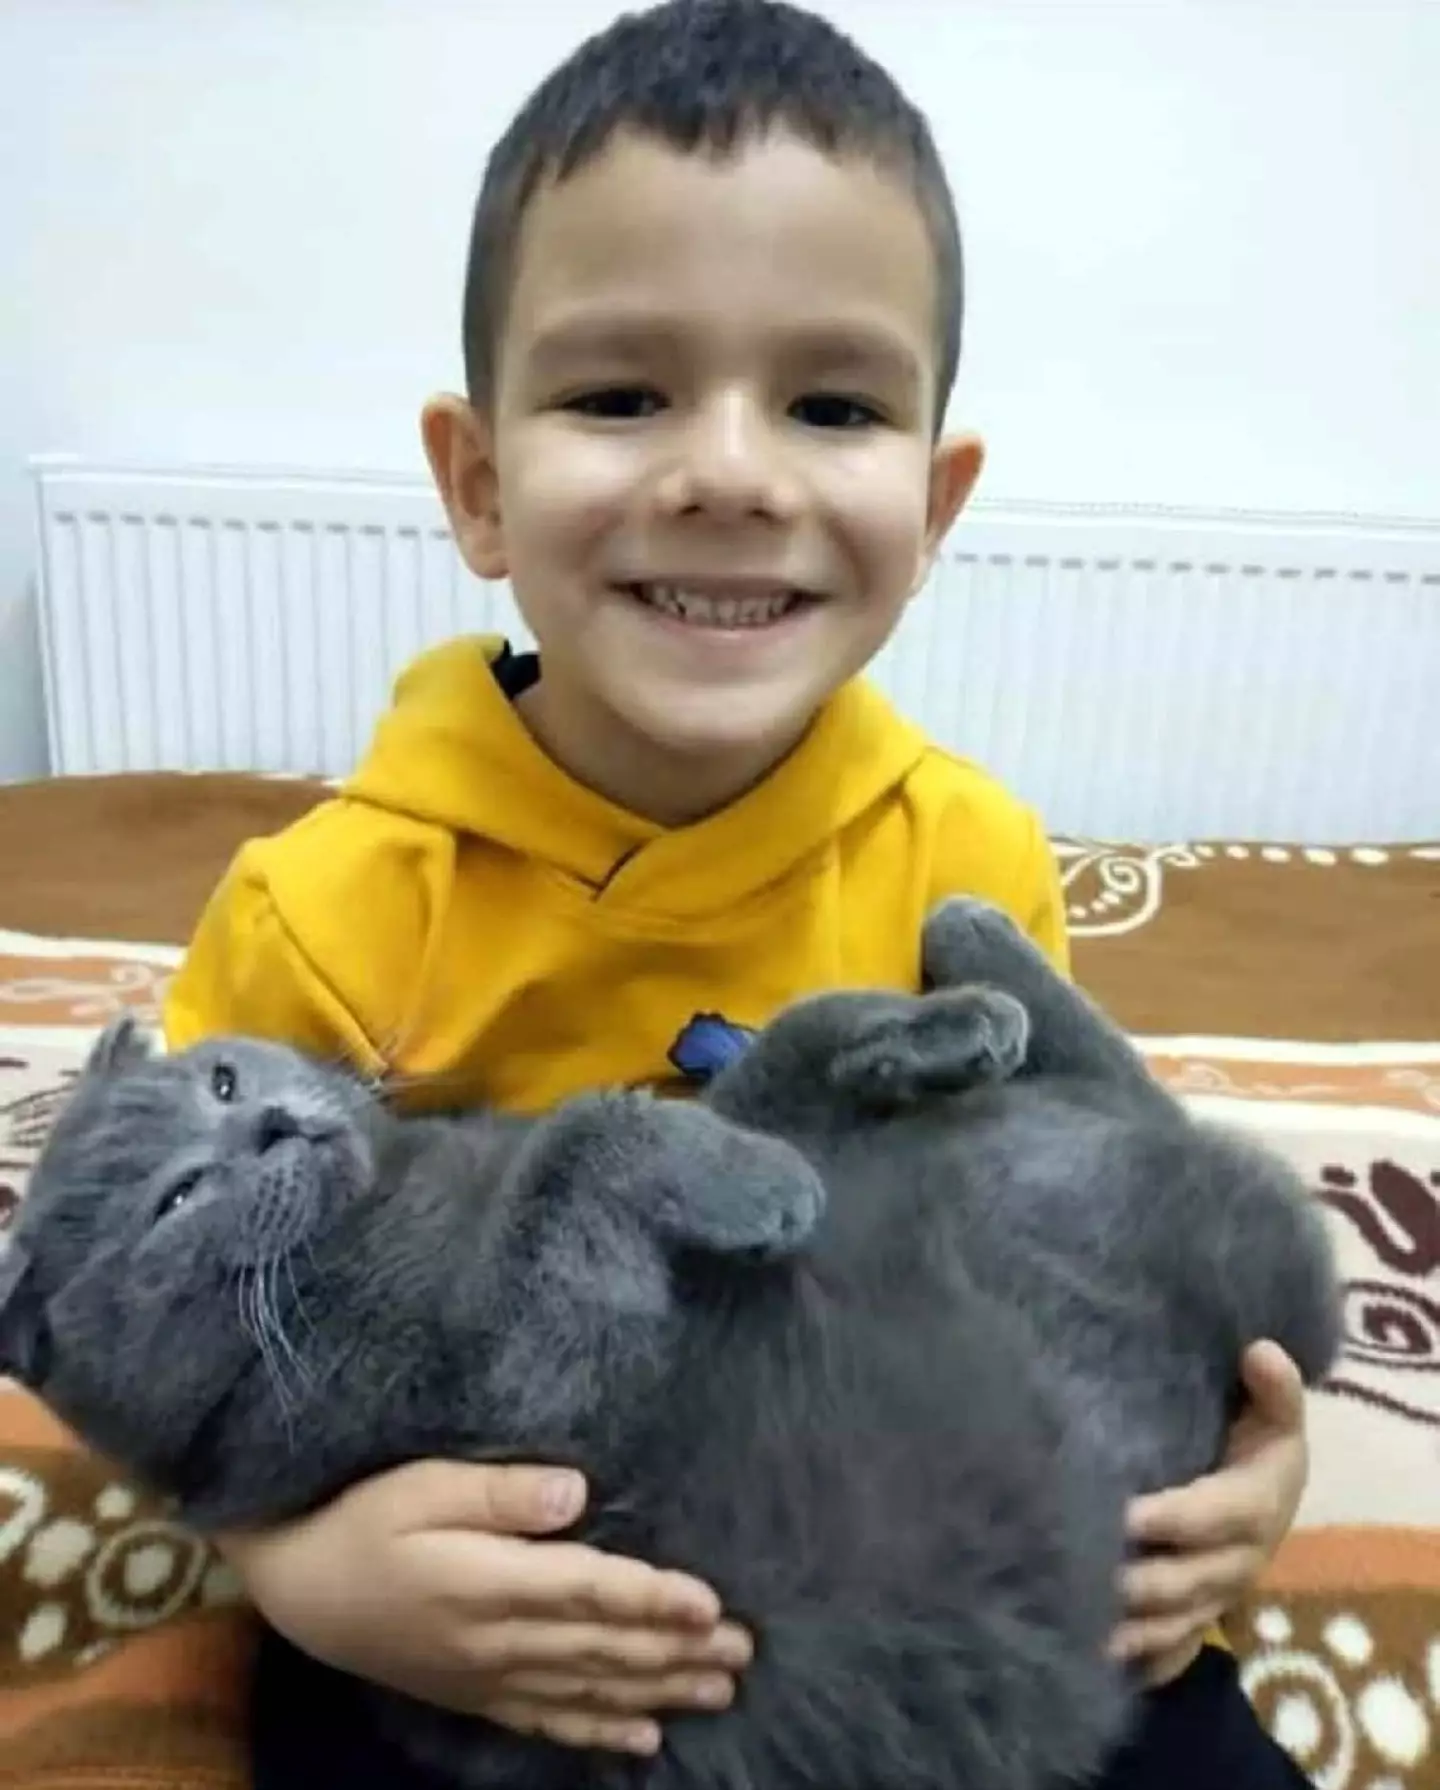 Six-year-old Tugrul Firat Gokalp has died.